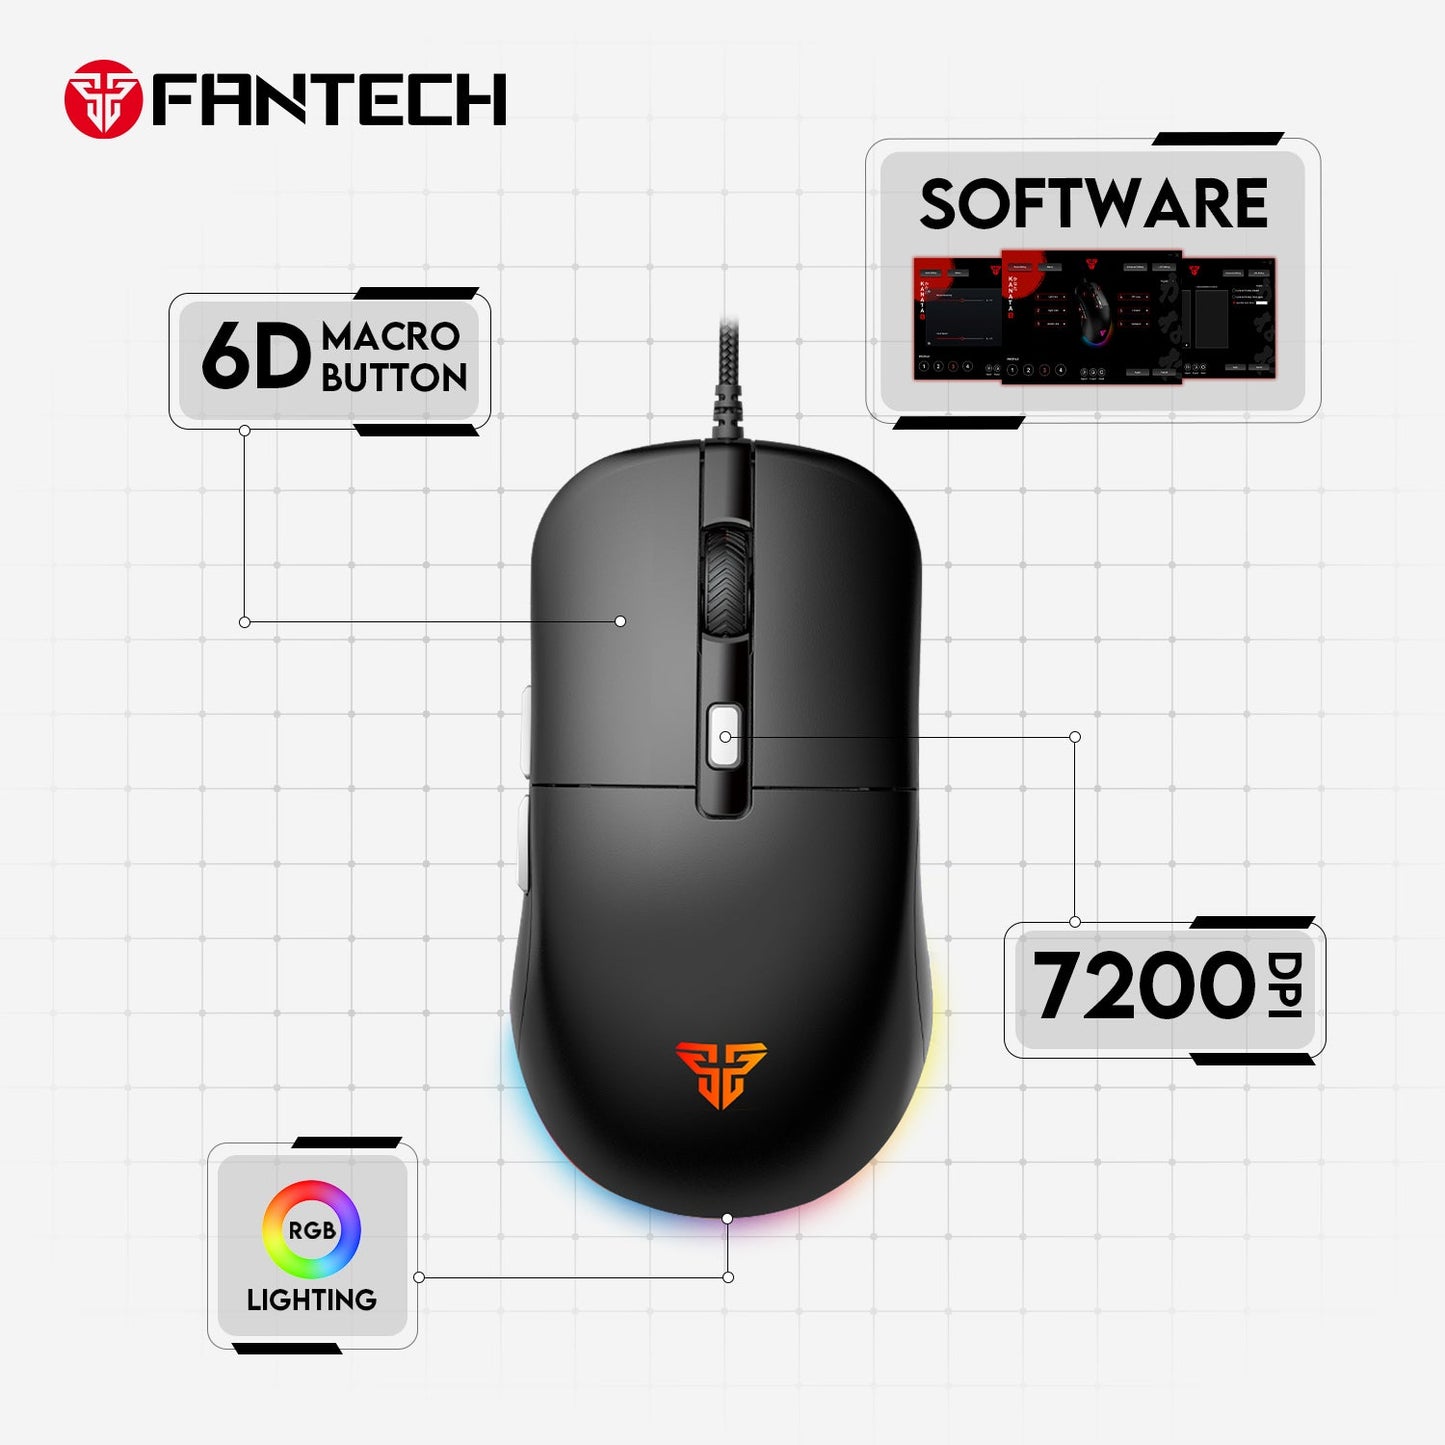 Fantech Kanata VX9S Gaming Mouse